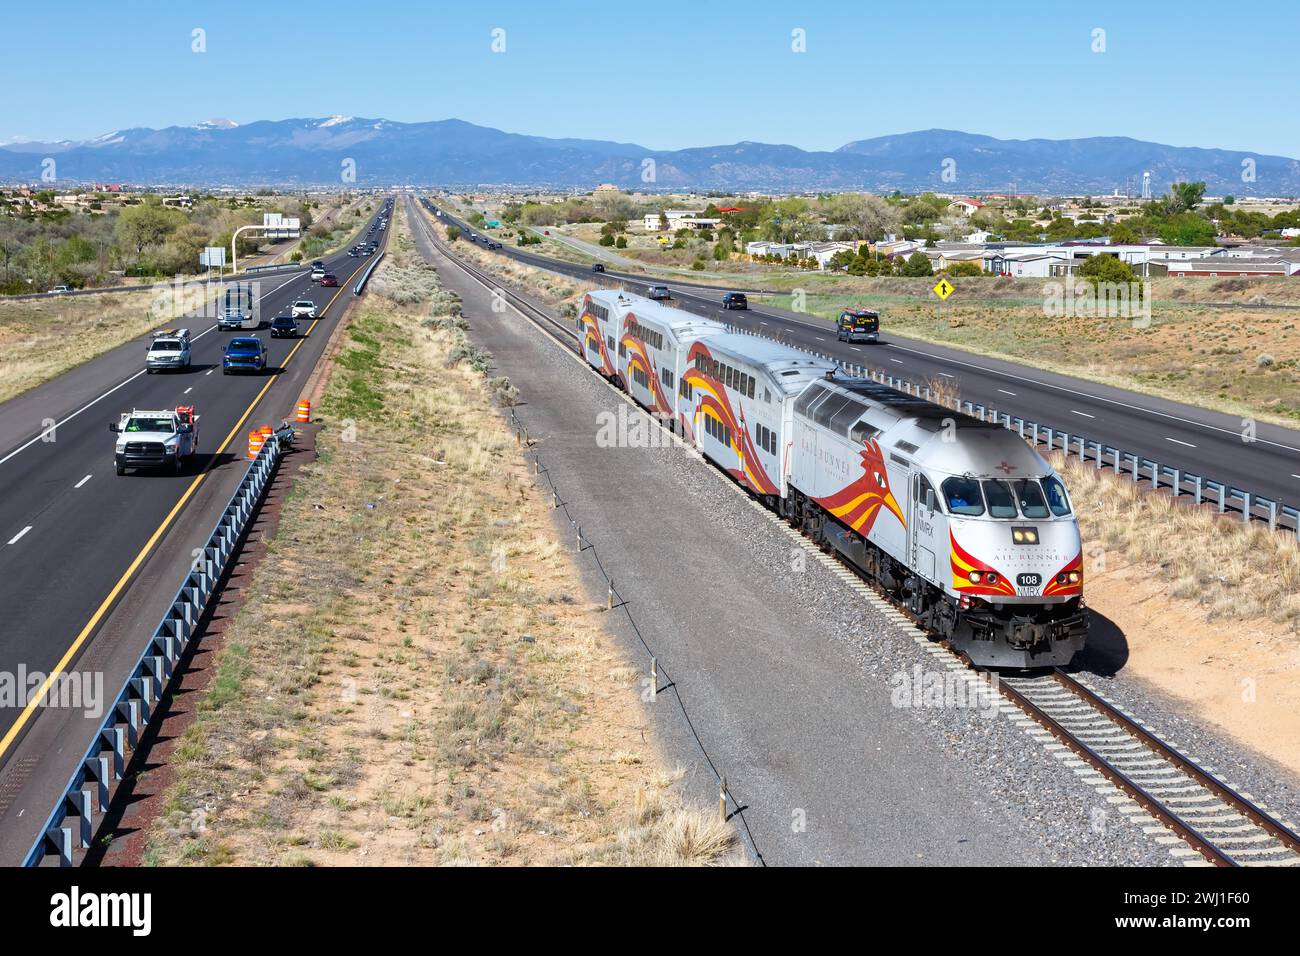 New Mexico Rail Runner Express Regional Train Railroad in der Nähe von Santa Fe, USA Stockfoto